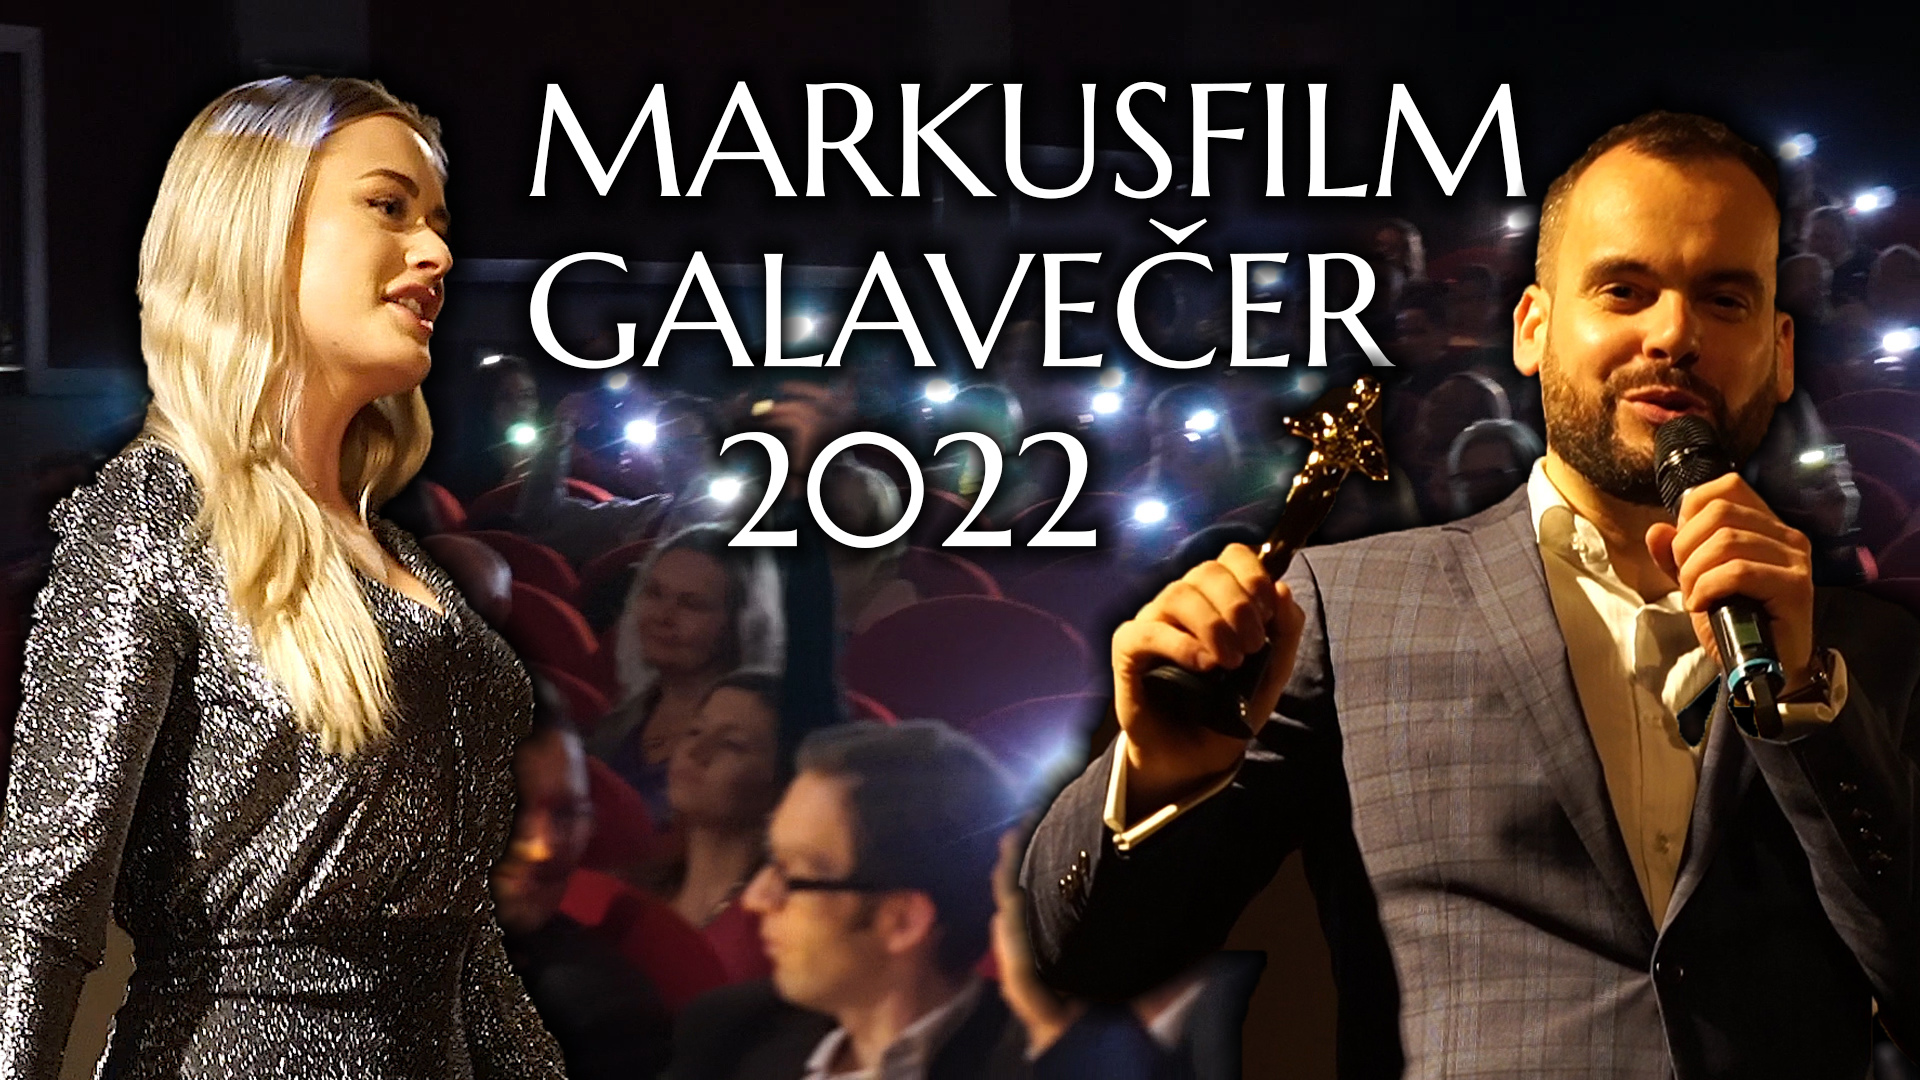 How was MARKUSFILM GALAV EVENING 2022?